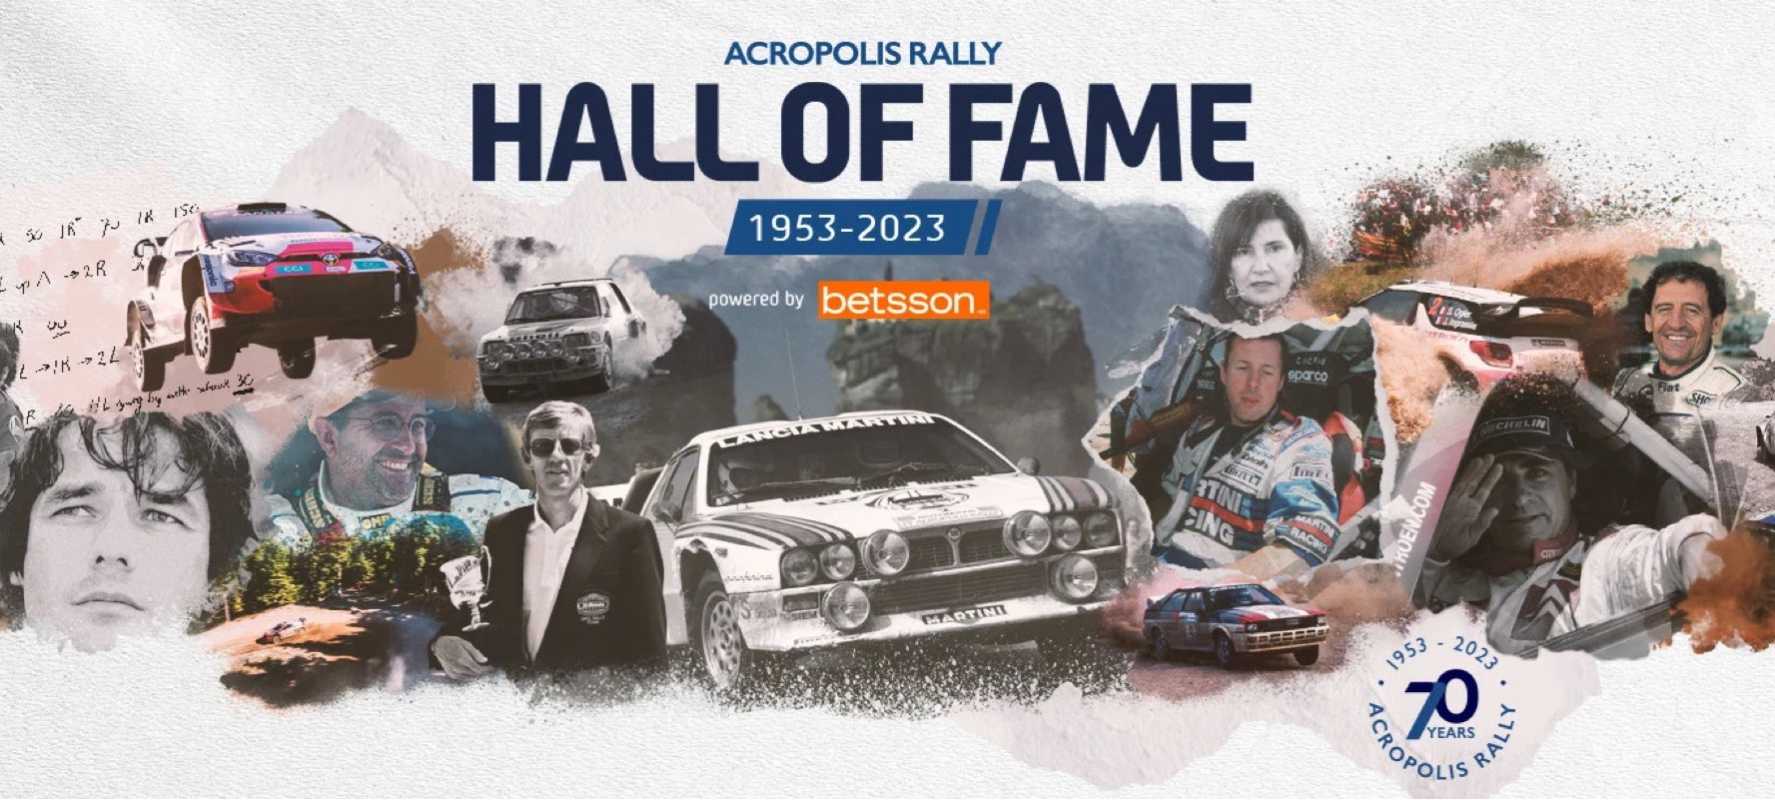 Acropolis Rally Hall Οf Fame: Ο κύβος ερρίφθη, ώρα νικητών